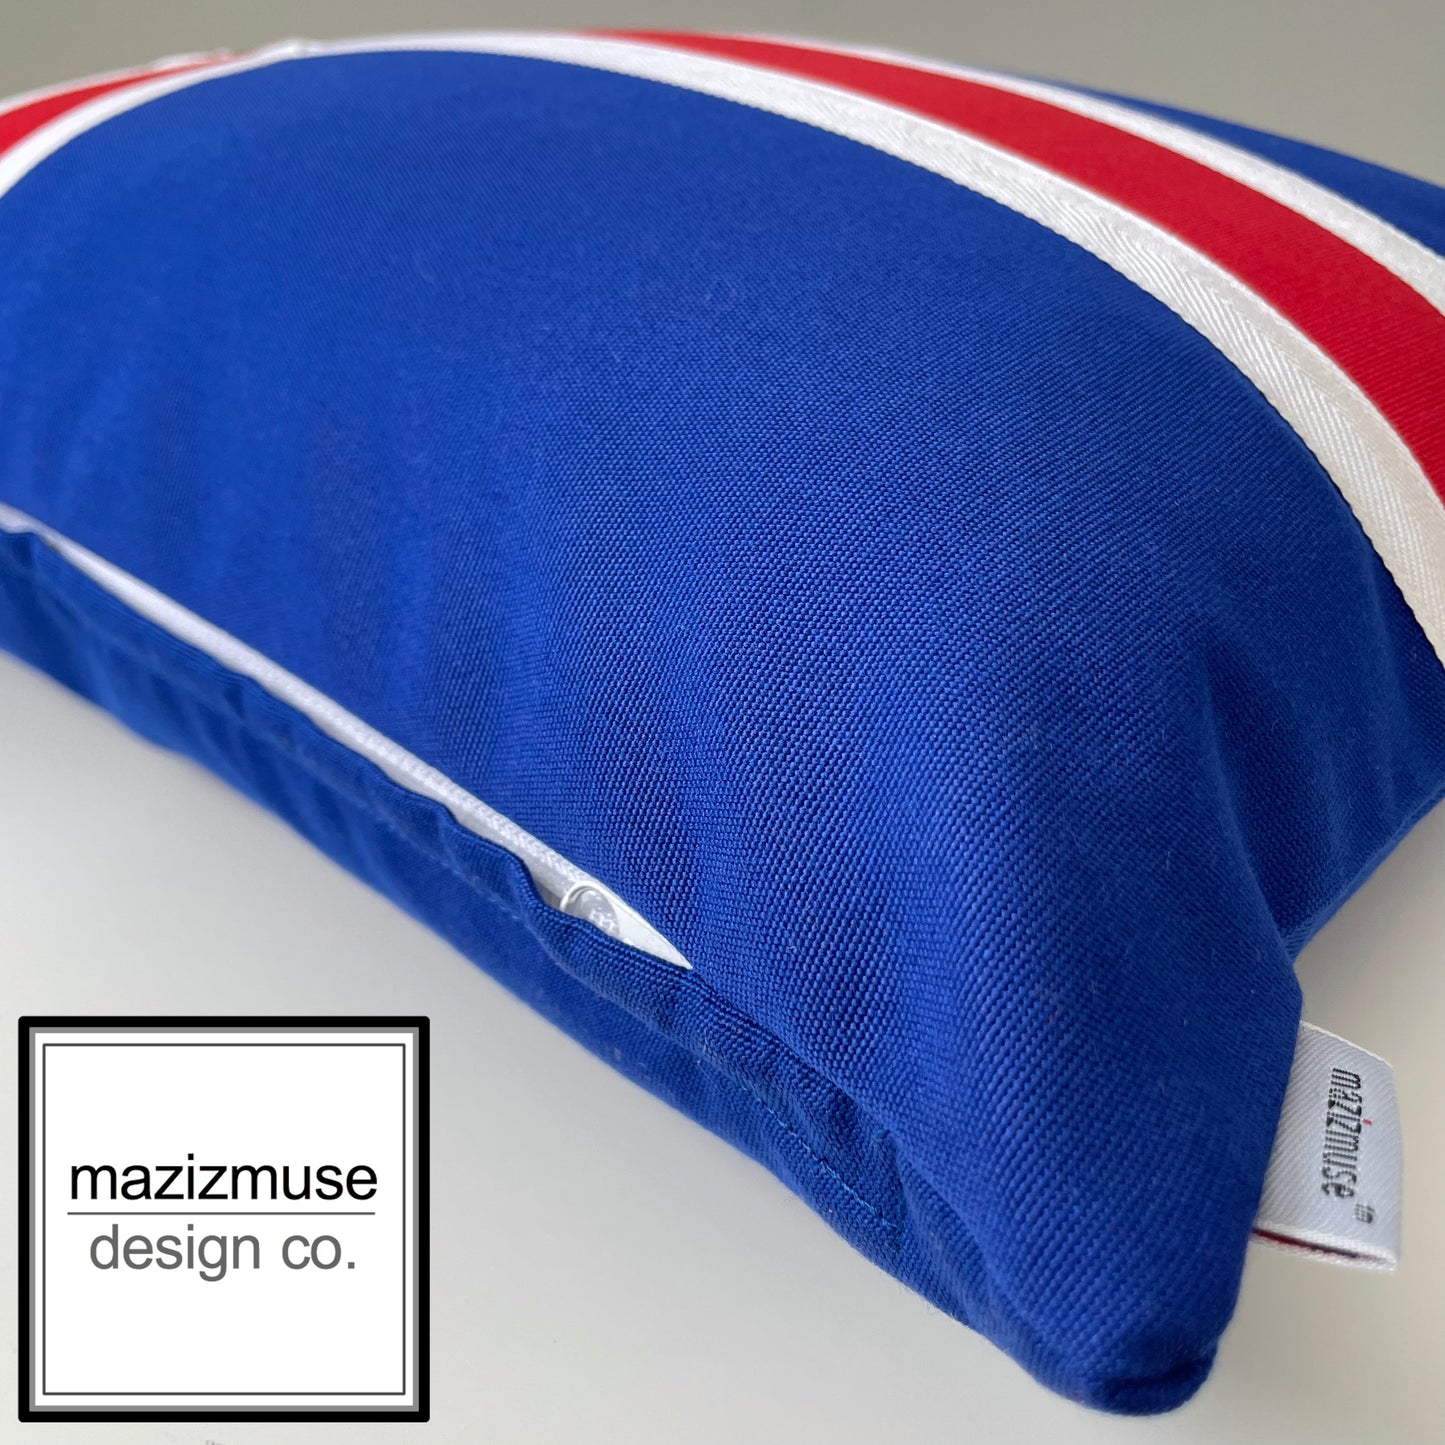 Decorative Iceland Flag Cushion Cover, Icelandic Flag Sunbrella Pillow Cover